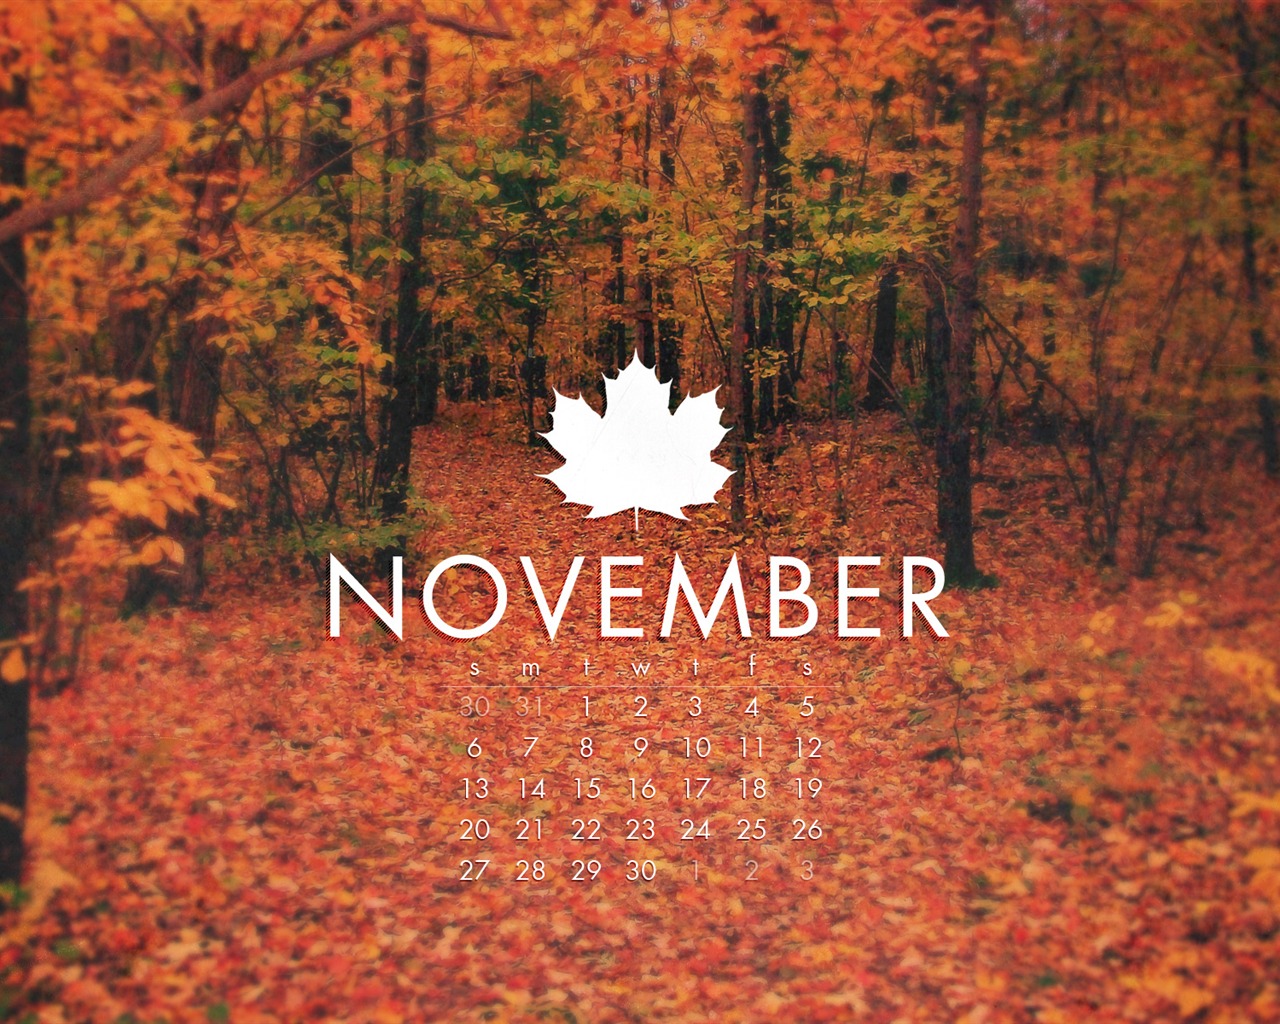 November 2011 Kalender Wallpaper (2) #11 - 1280x1024